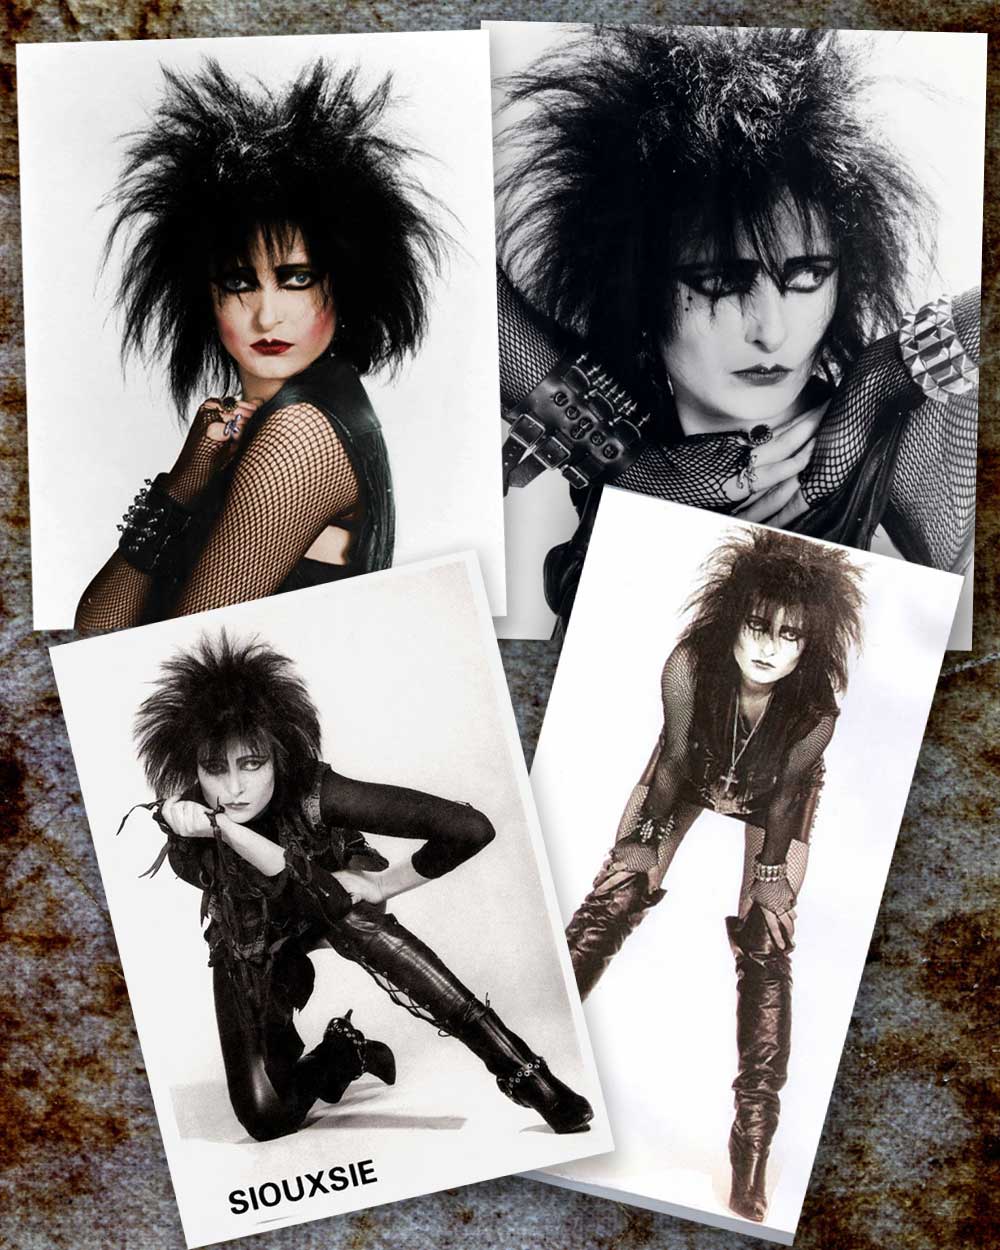 Siouxsie Sioux 80s Goth fashion style